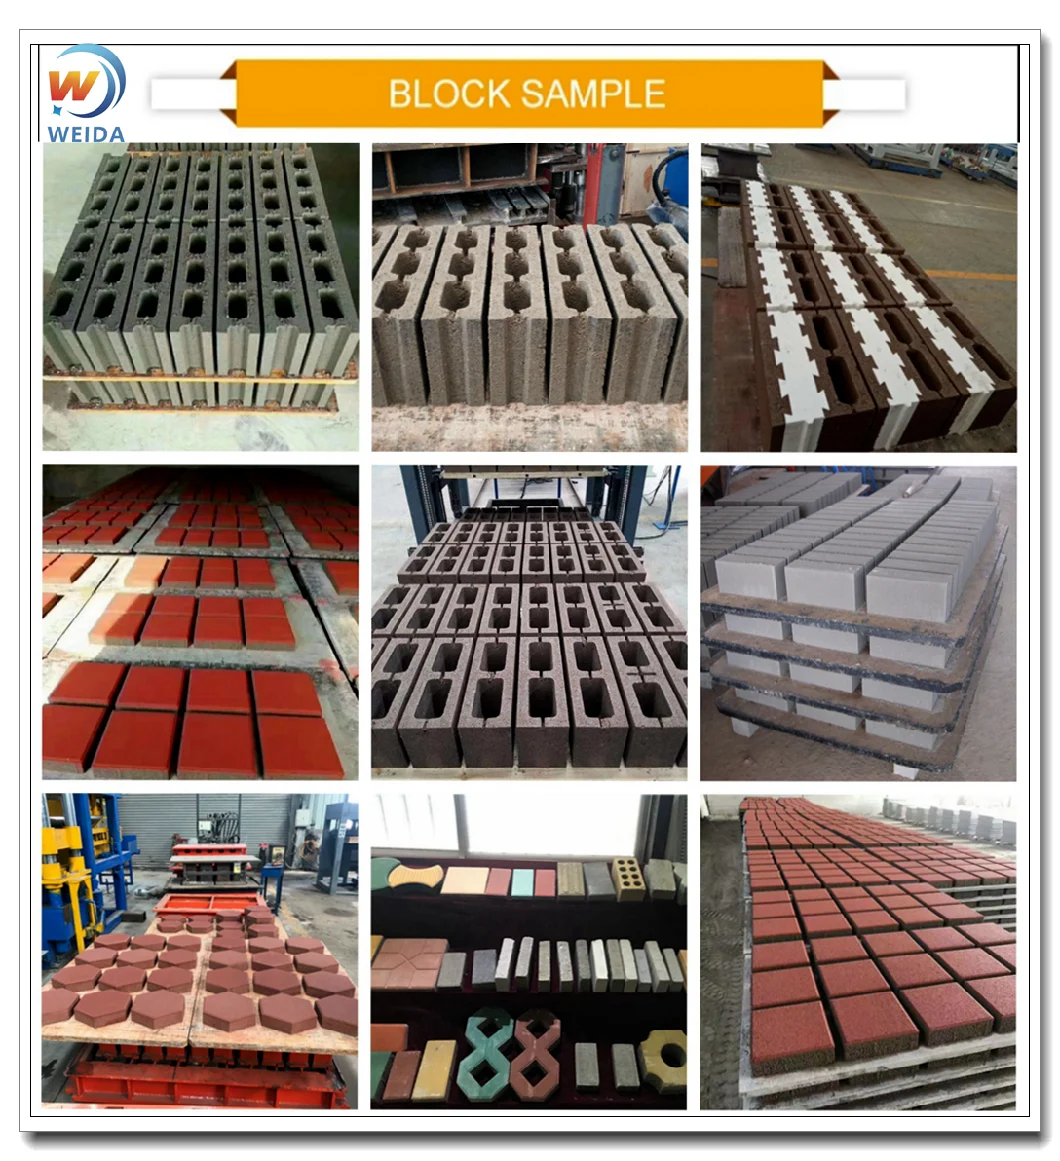 Factory Supply Superior Big Scale Full Automatic Hydraulic Concrete Hollow Concrete Brick Block Production Line